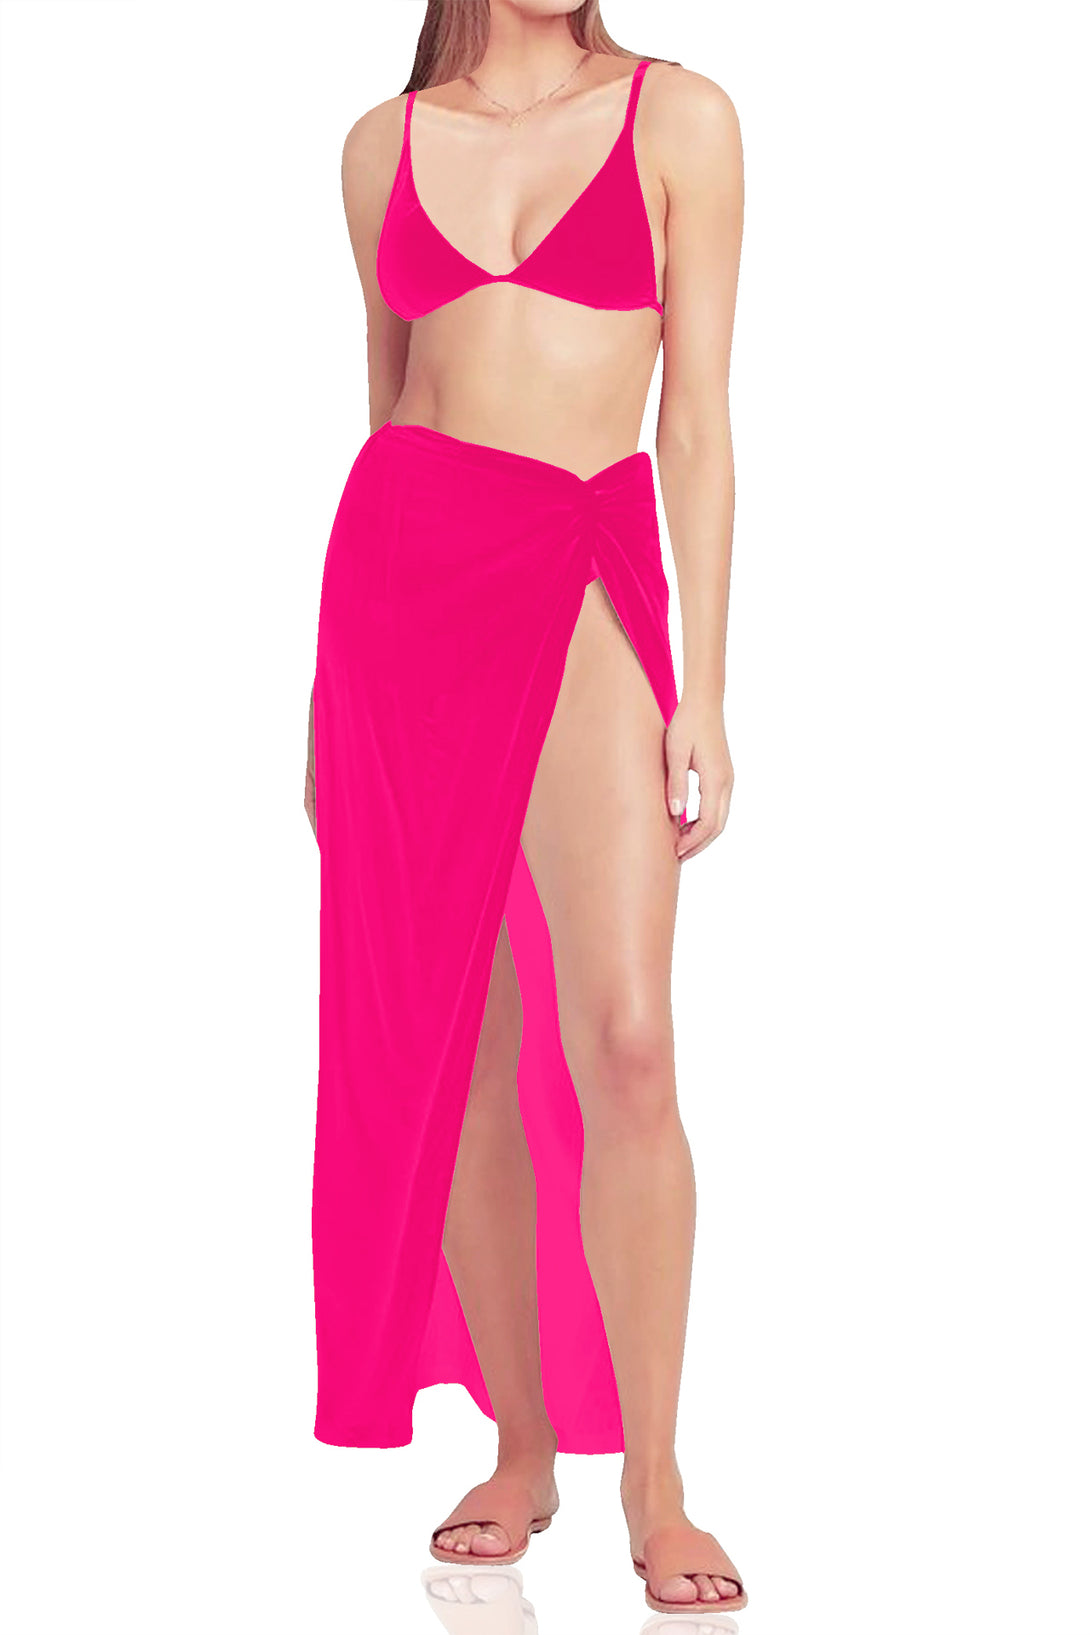 sexy bikini sets, swimsuits for curvy women, swim suits for ladies, Shahida Parides,